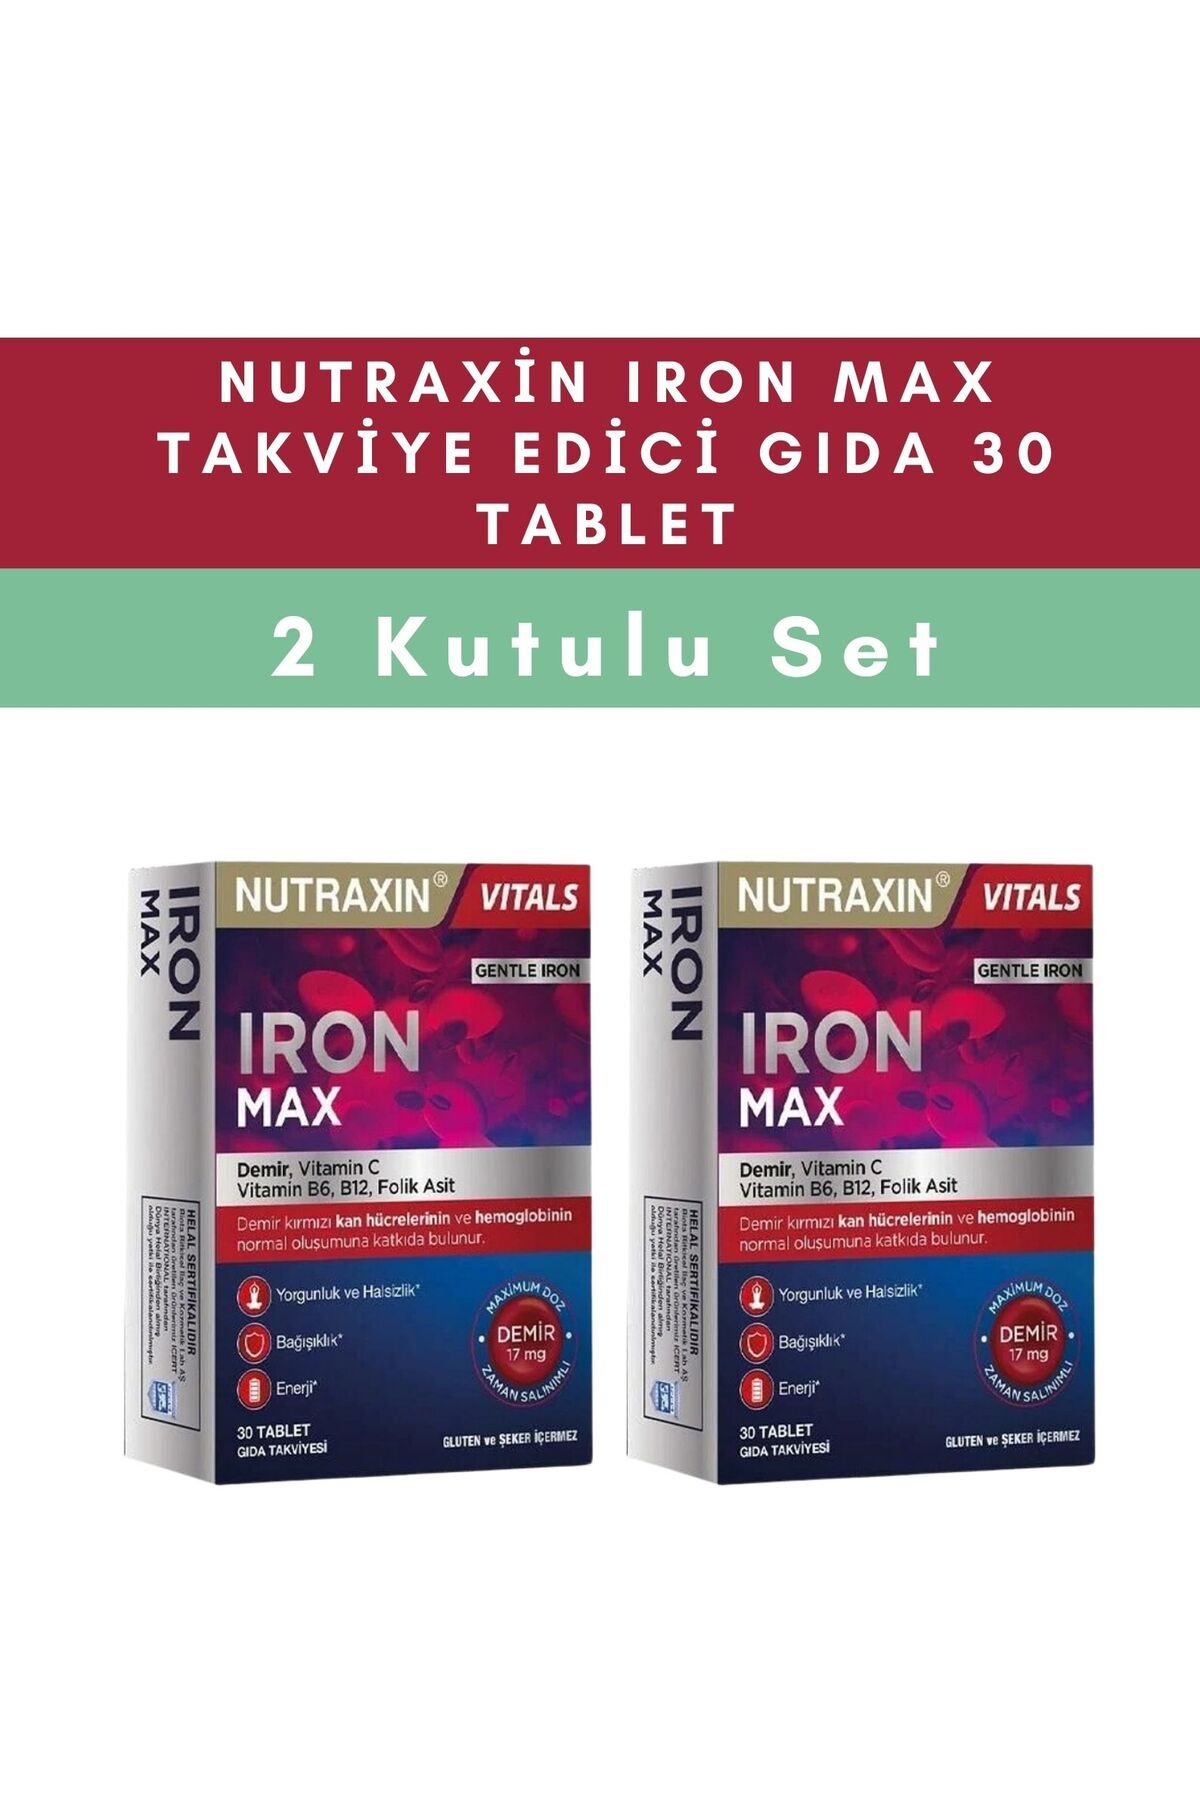 Nutraxin Iron Max Takviye Edici Gıda 30 Tablet | 2 KUTULU SET